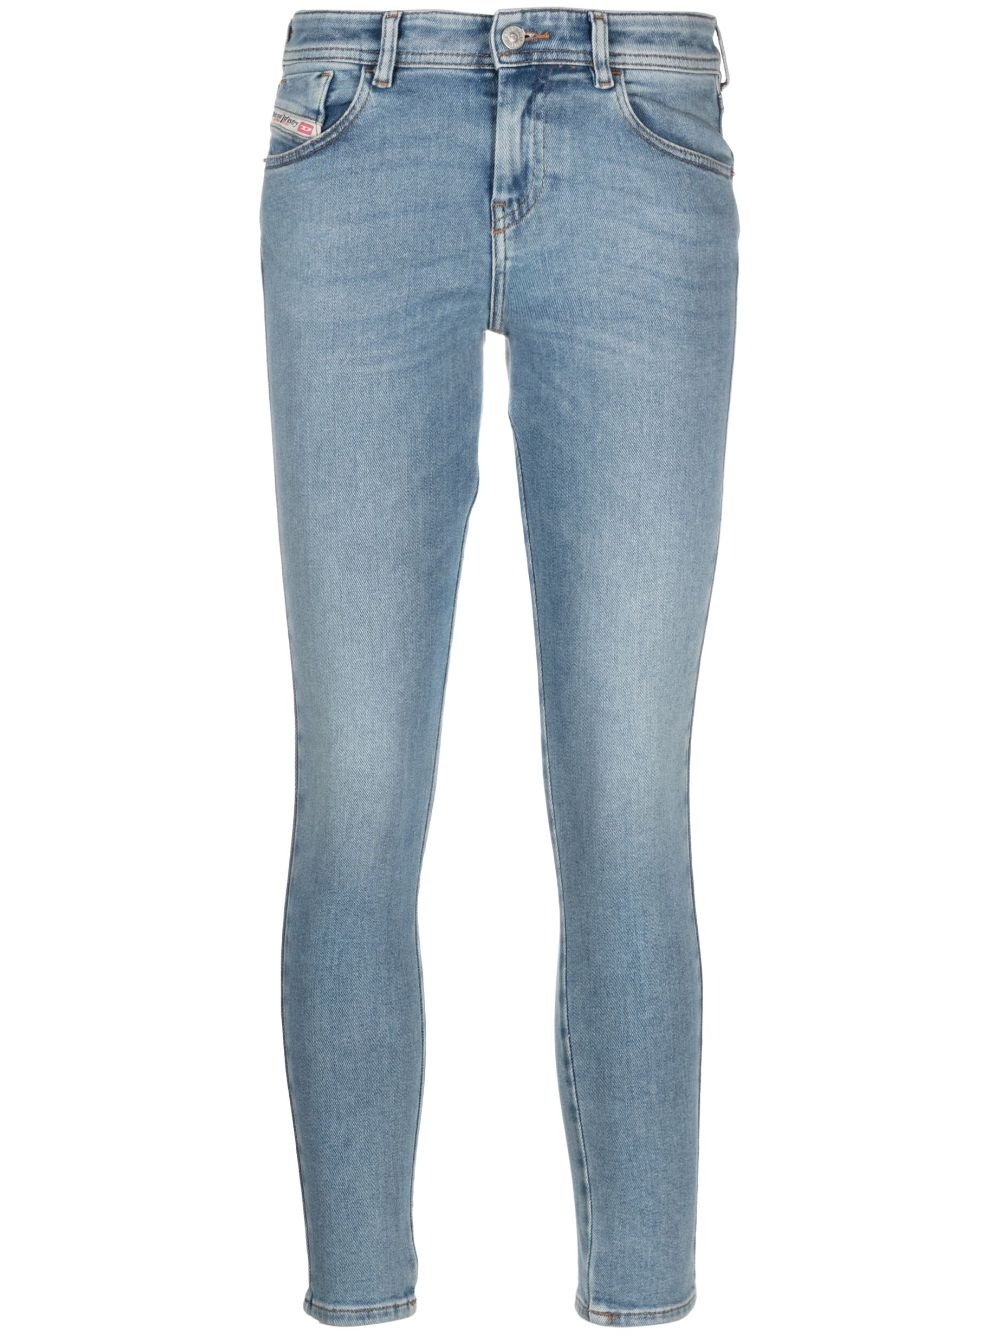 2017 Slandy skinny jeans - 1